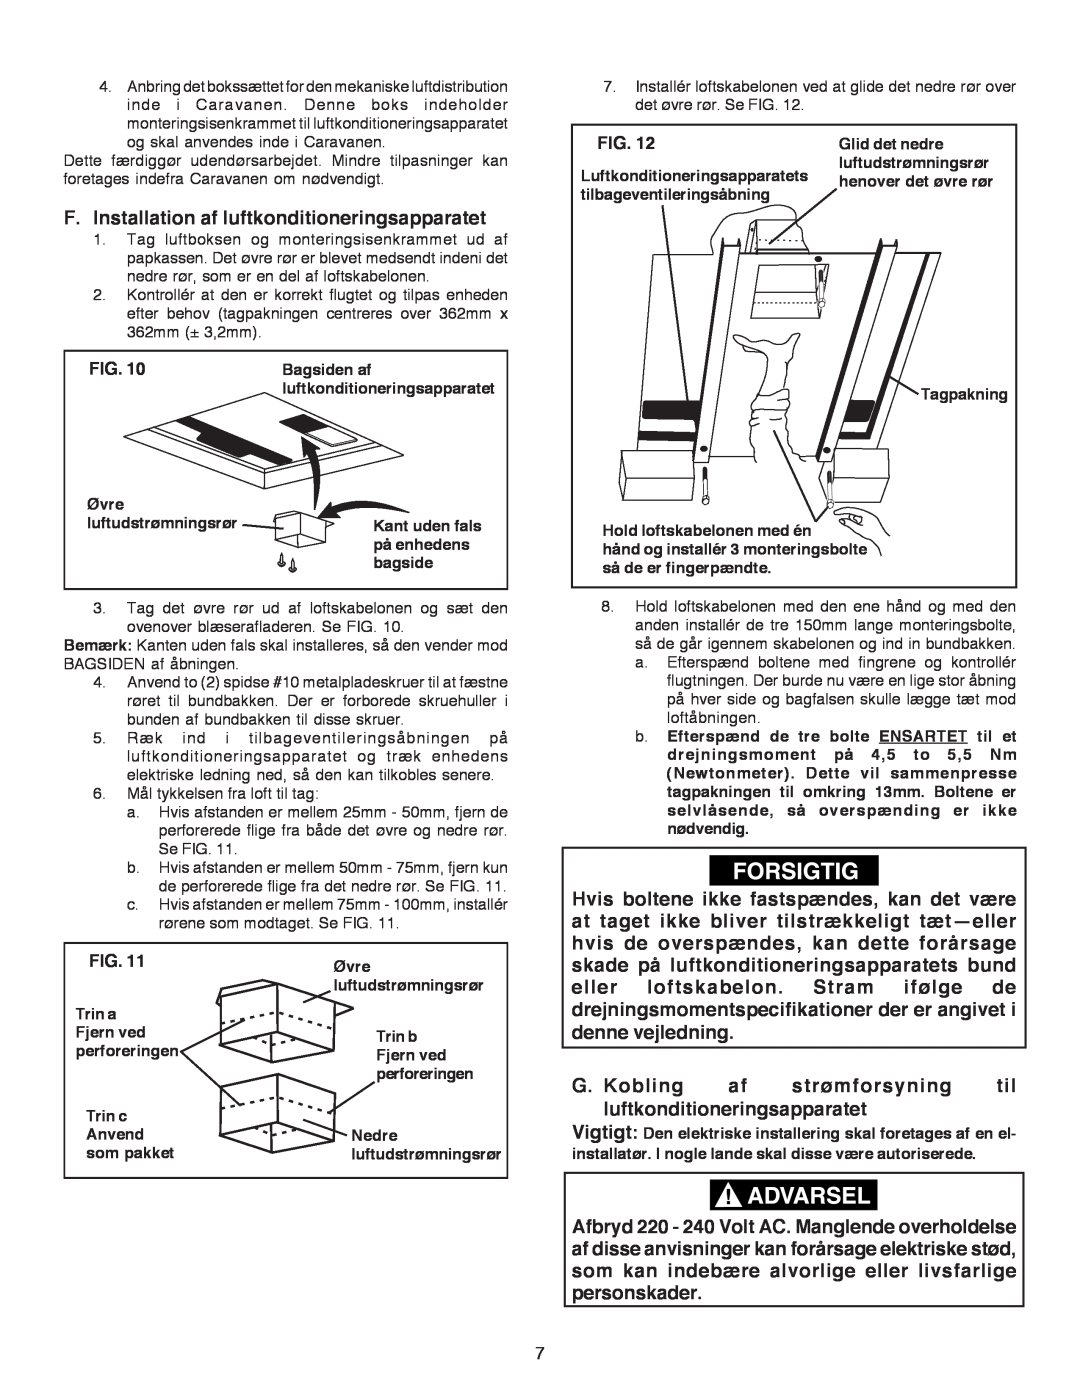 Dometic B3200 manual F.Installation af luftkonditioneringsapparatet 